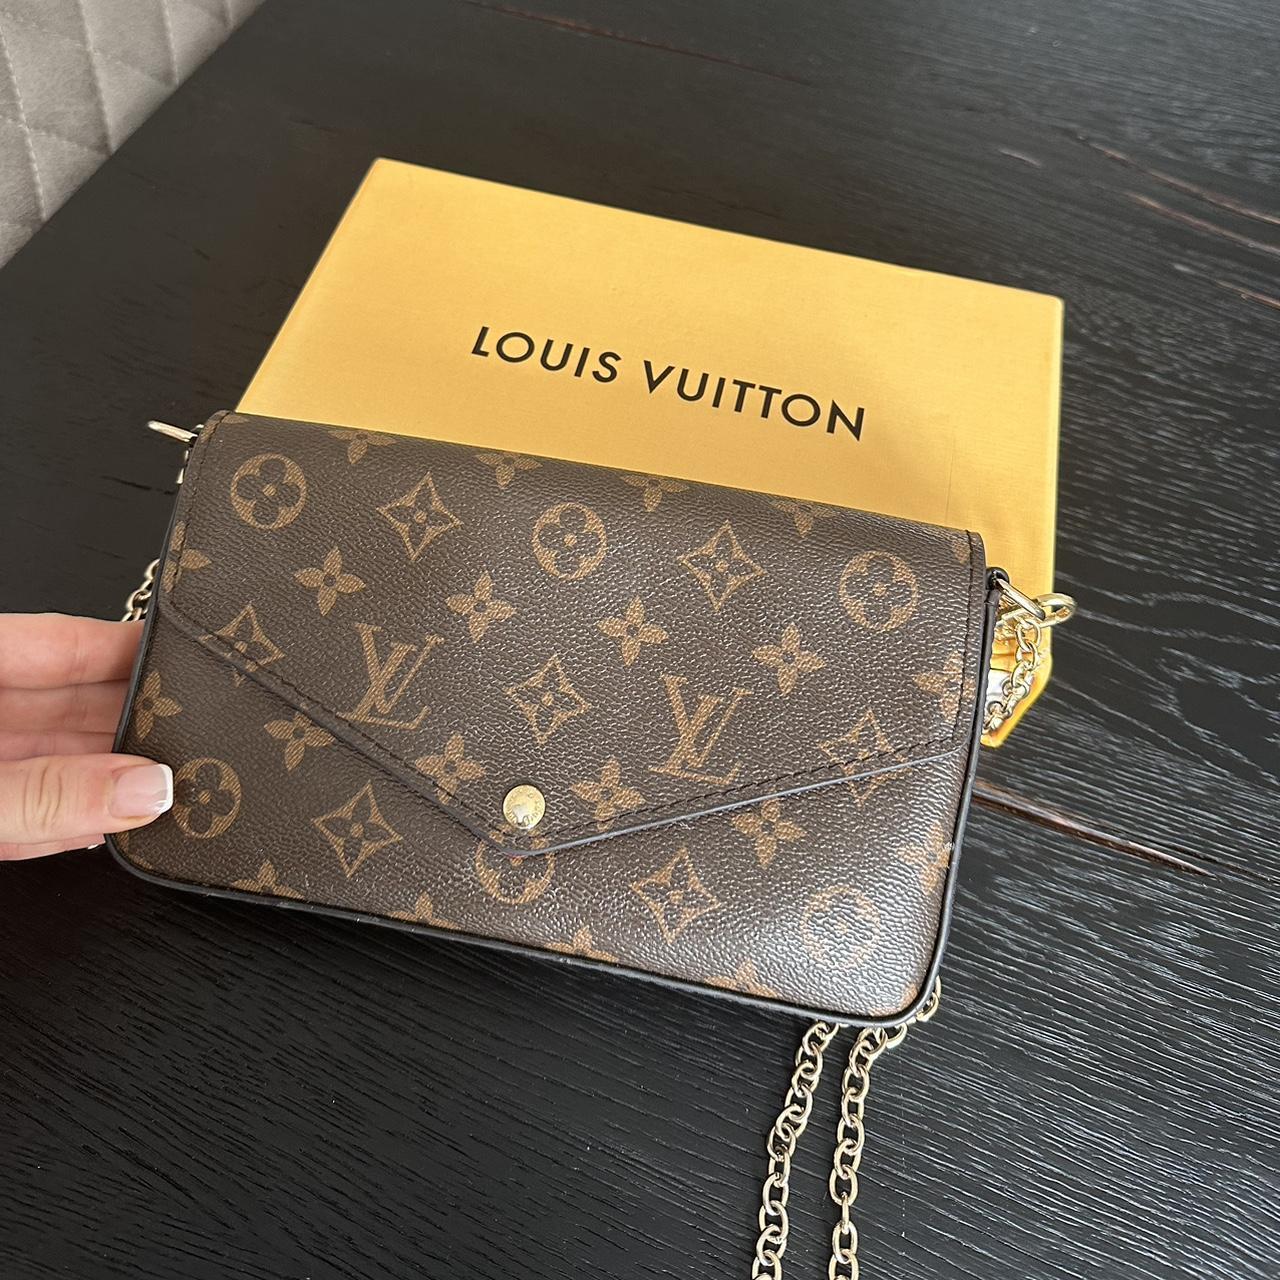 Louis Vuitton cross body bag Front popper slightly... - Depop